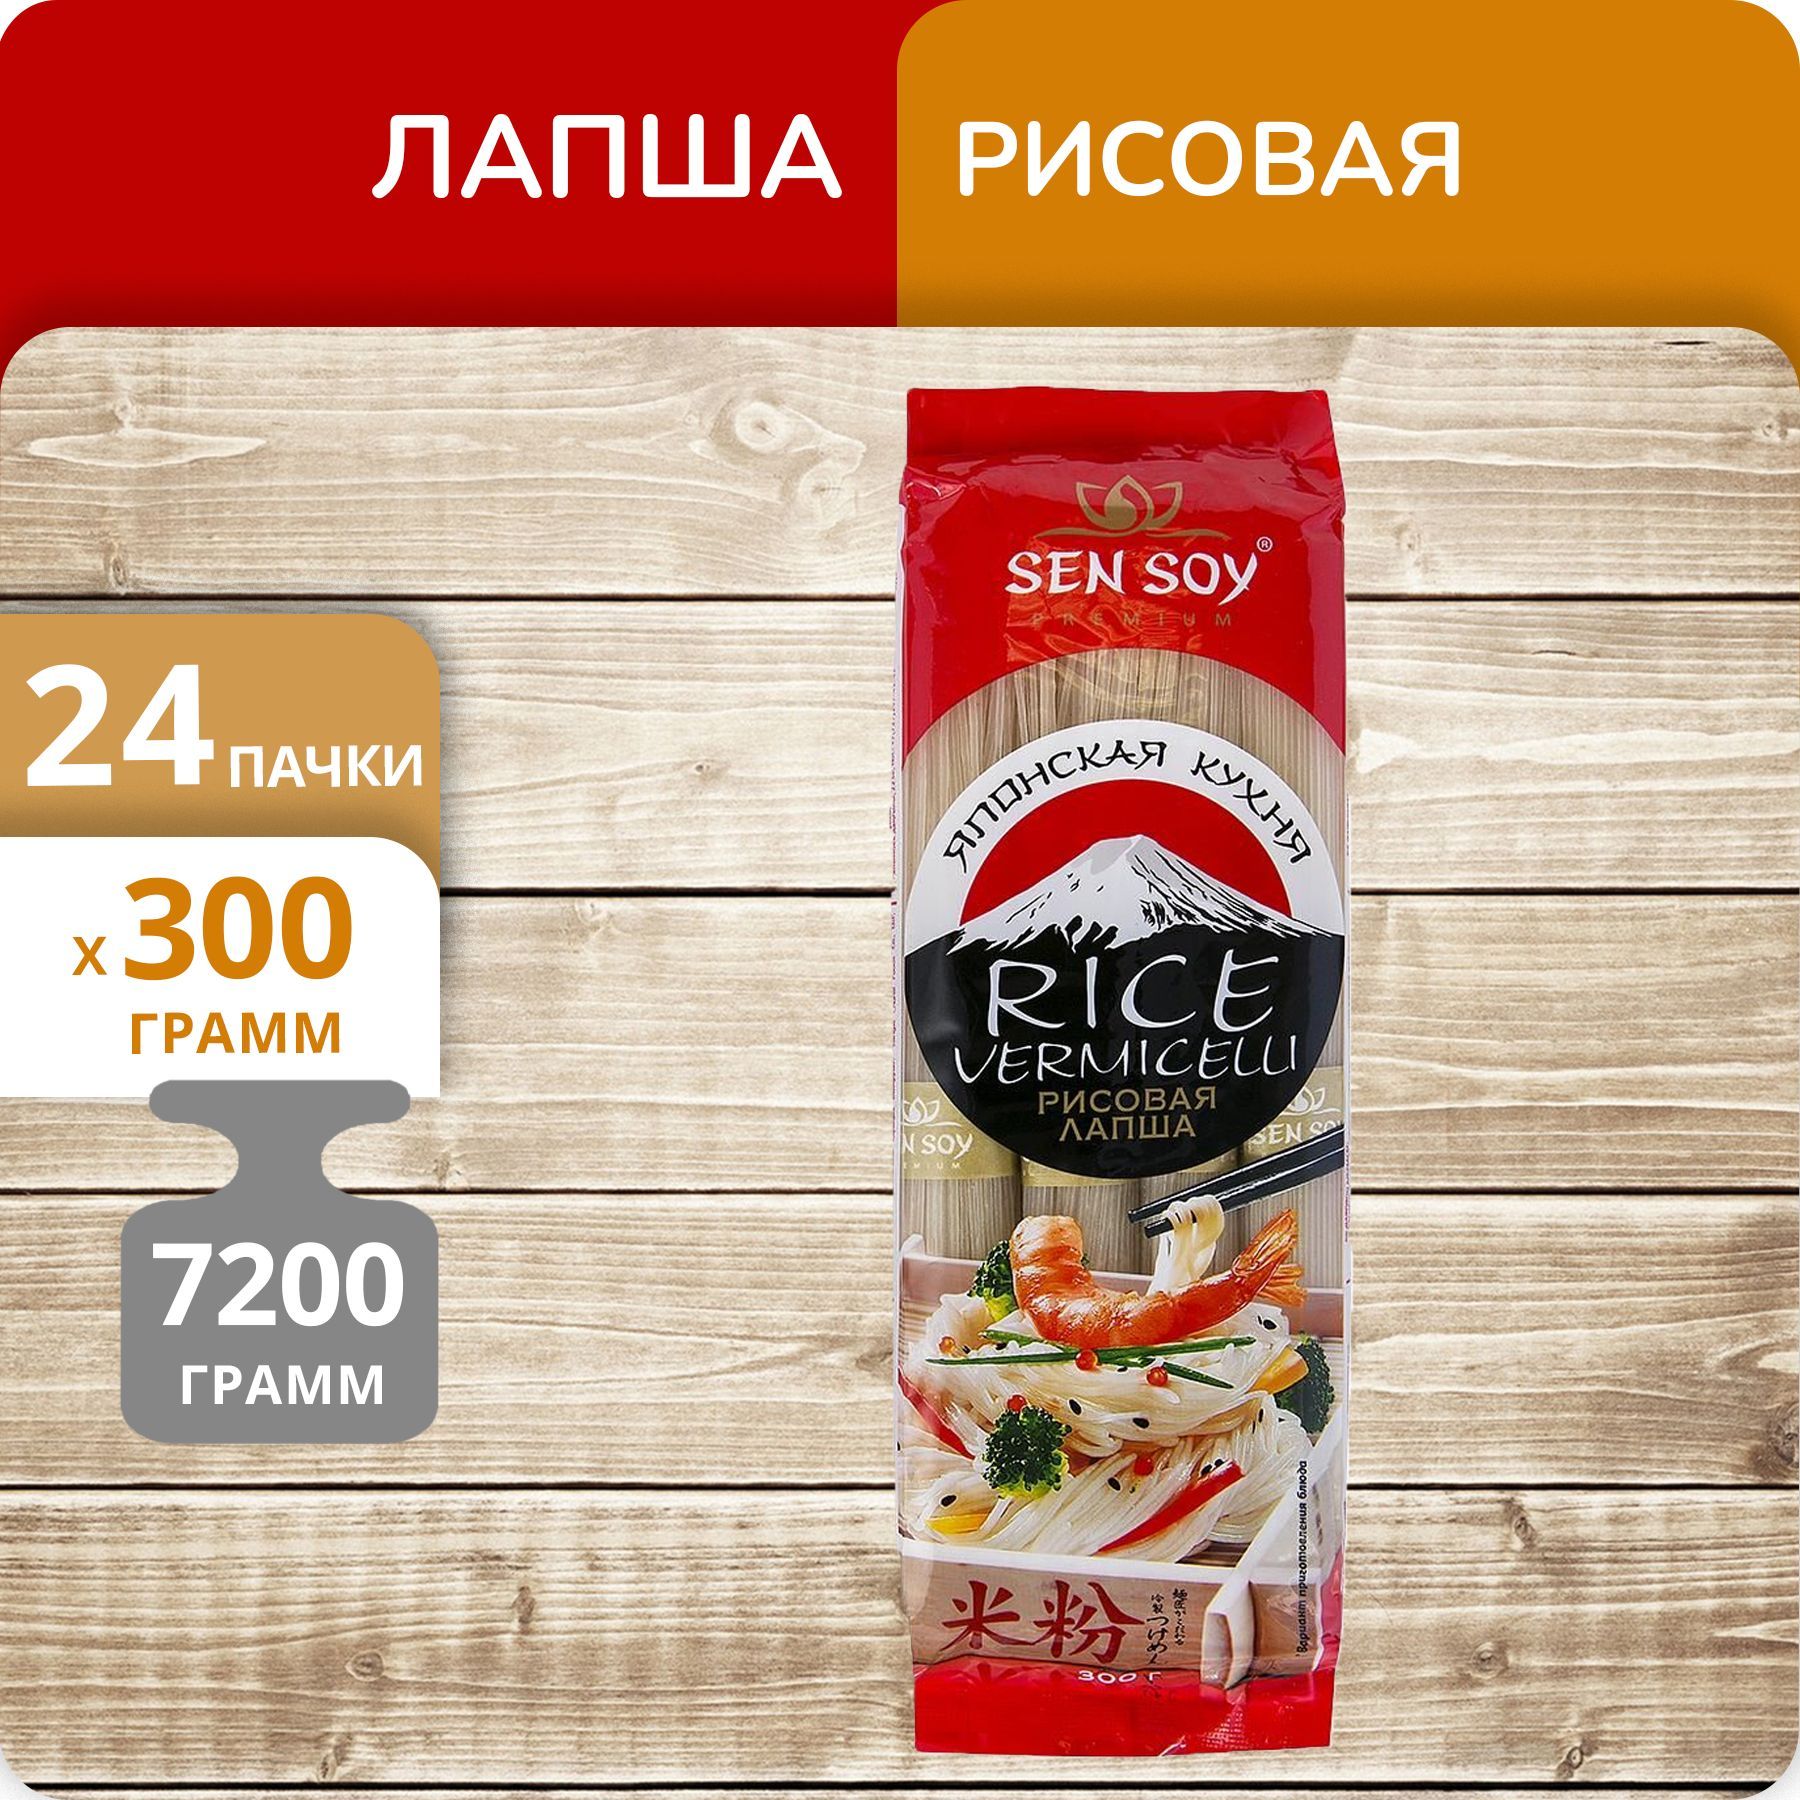 Лапша Sen Soy рисовая Rice vermicelli, 300 г х 24 шт